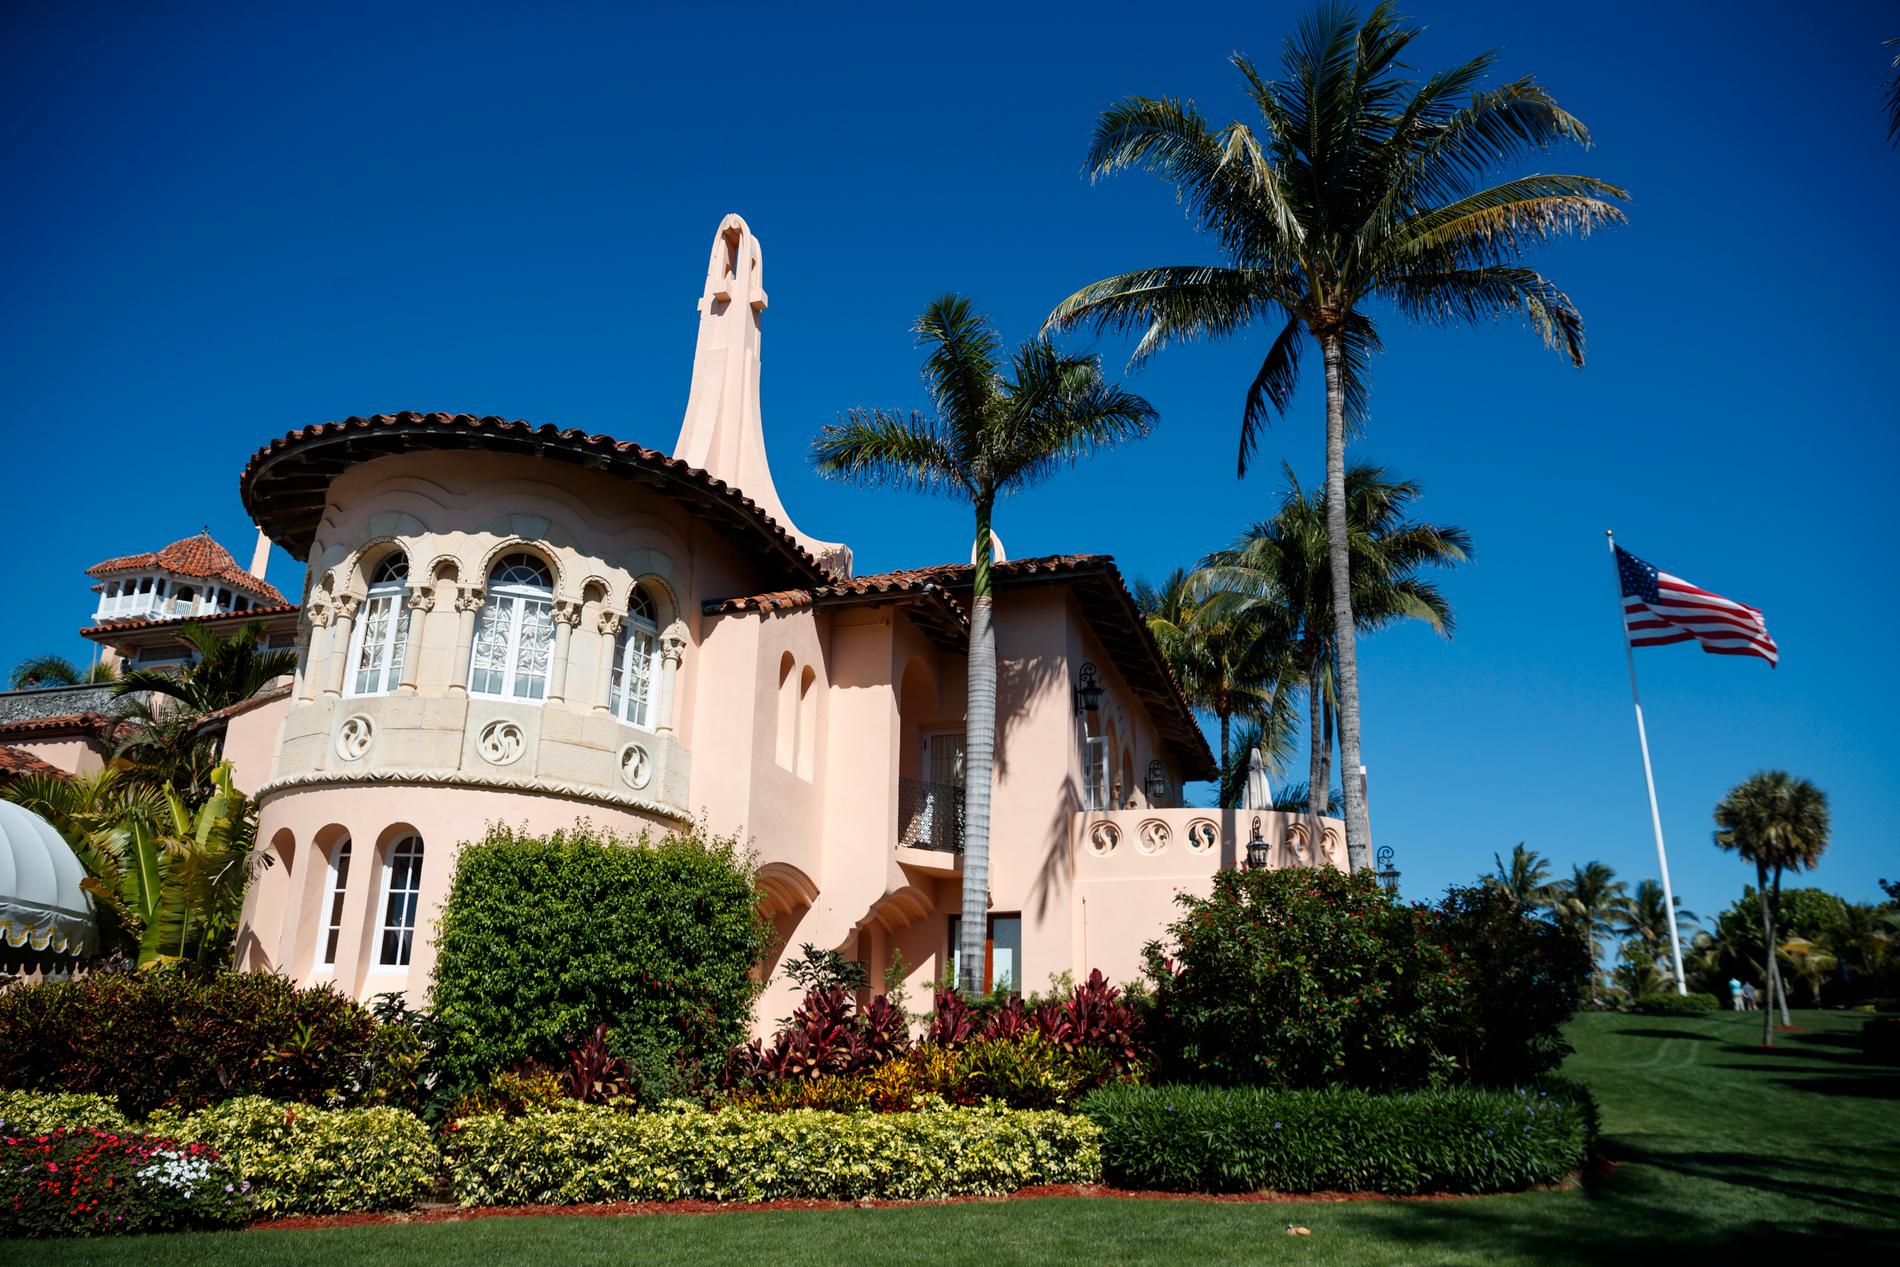 Donald Trumps egendom Mar-a-Lago ligger i Palm Beach i Florida. Arkivbild.